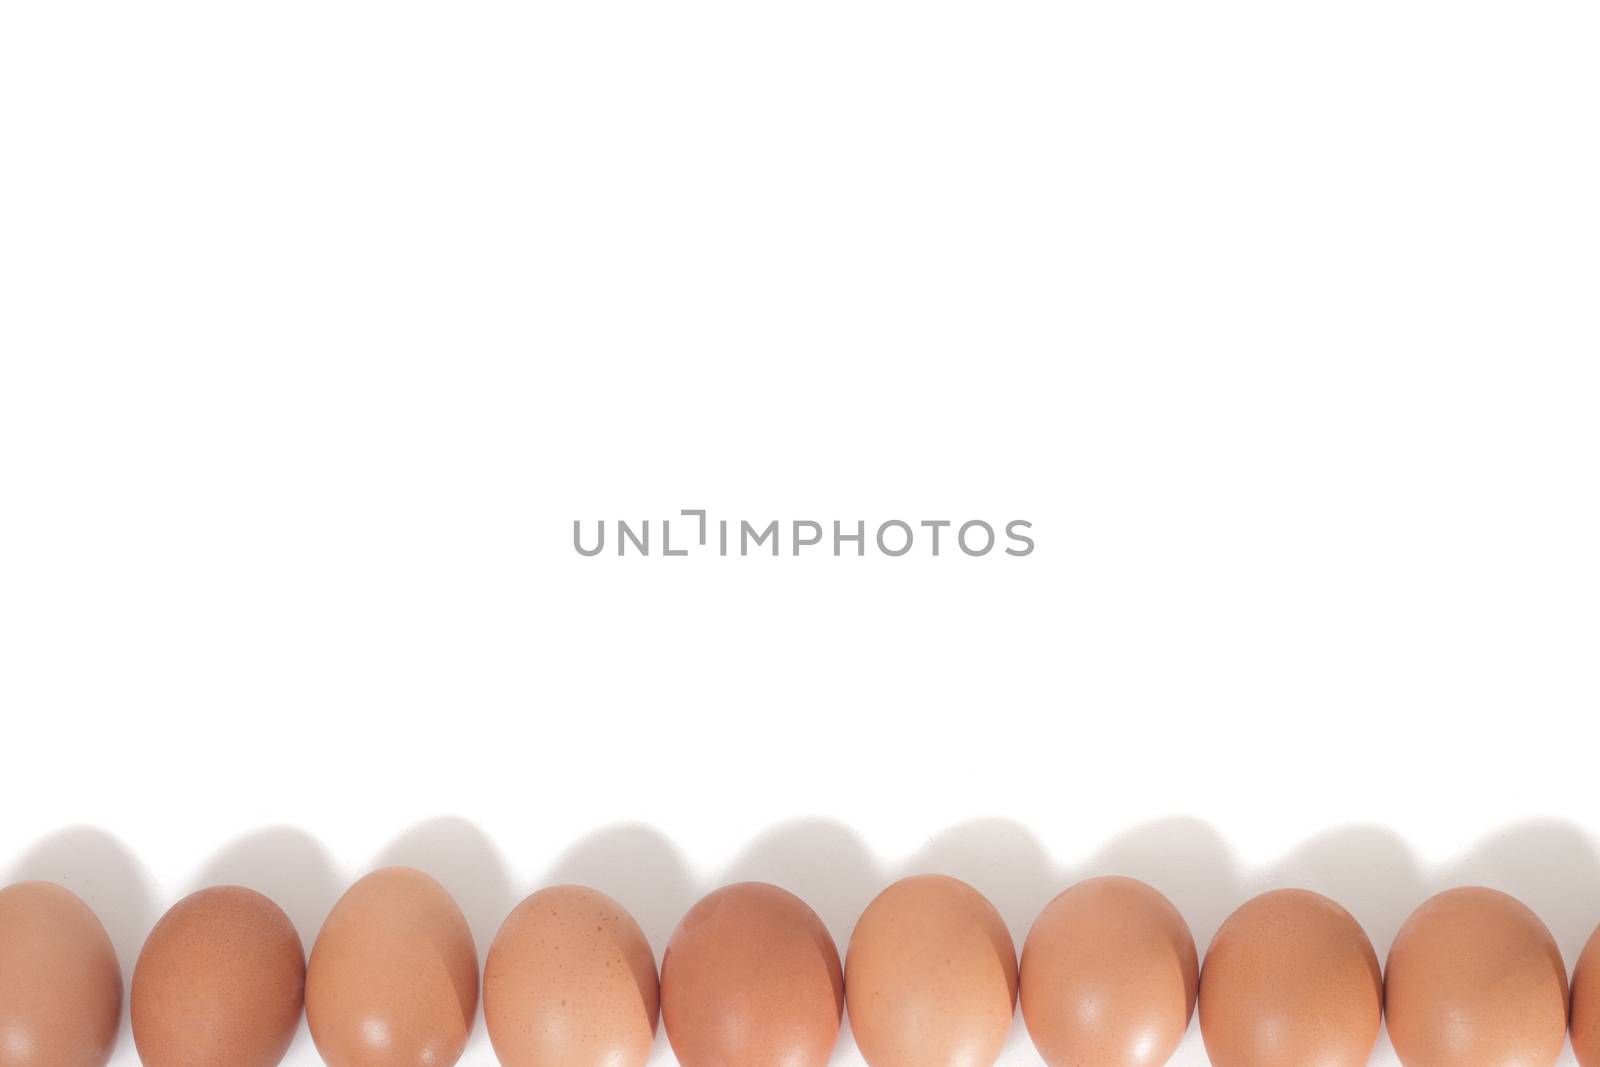 eggs aligned horizontally isolated on a white background.